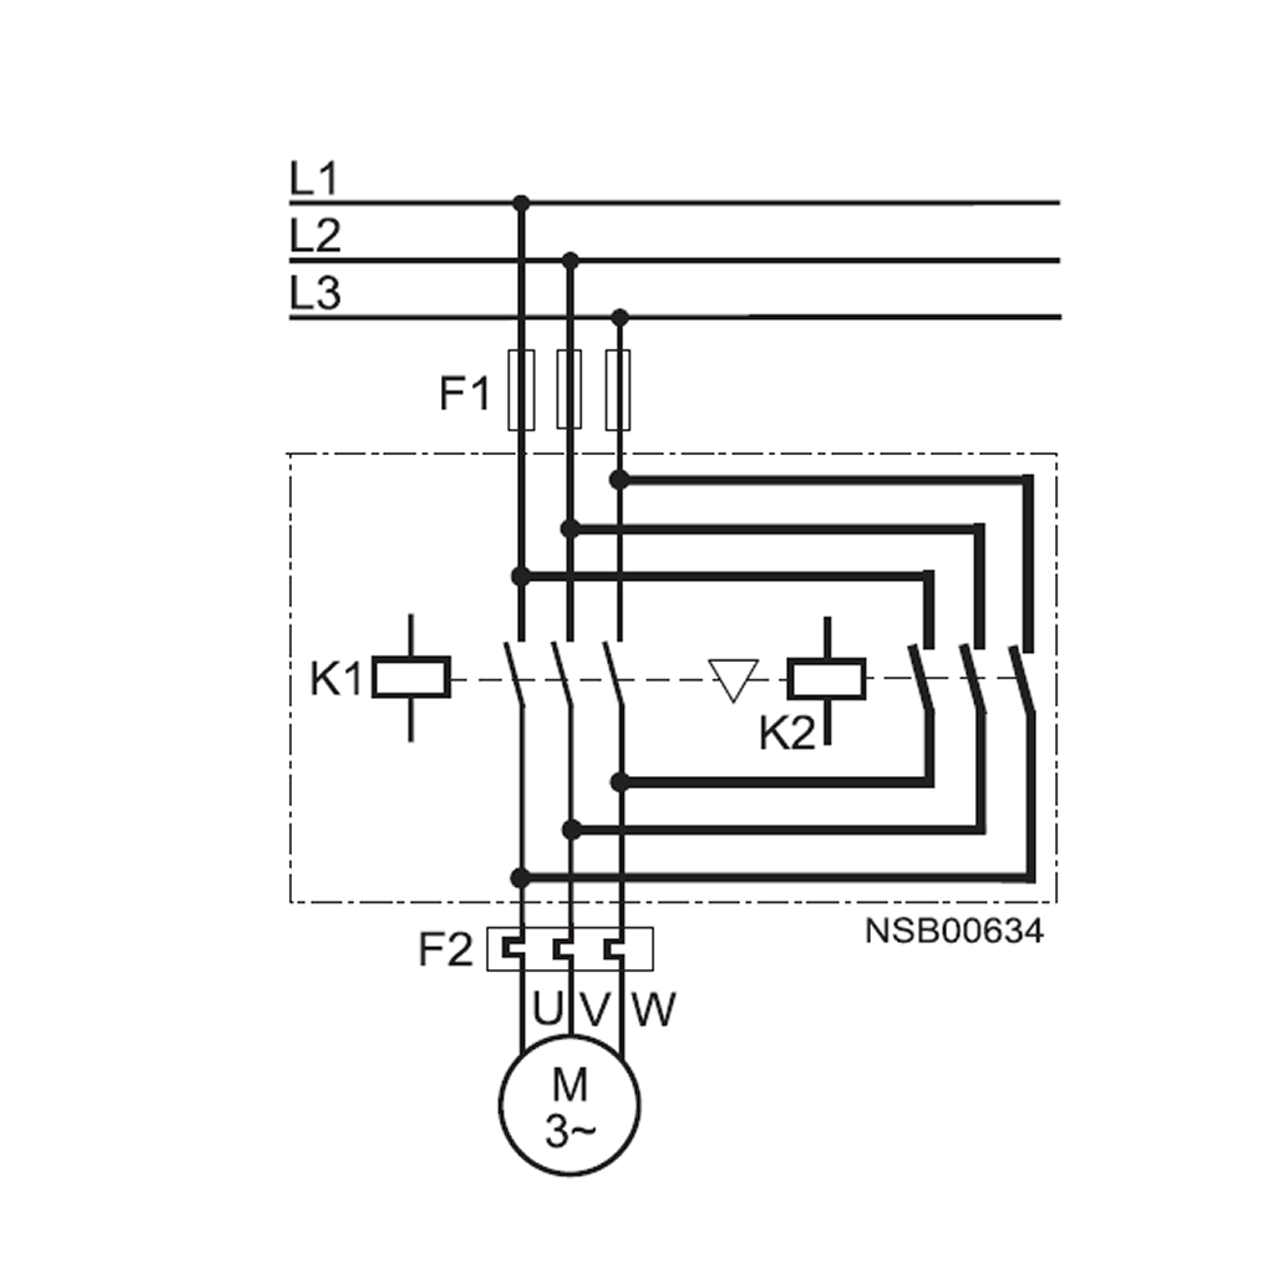 Siemens 3RA2336-8XB30-1AP6 wiring diagram